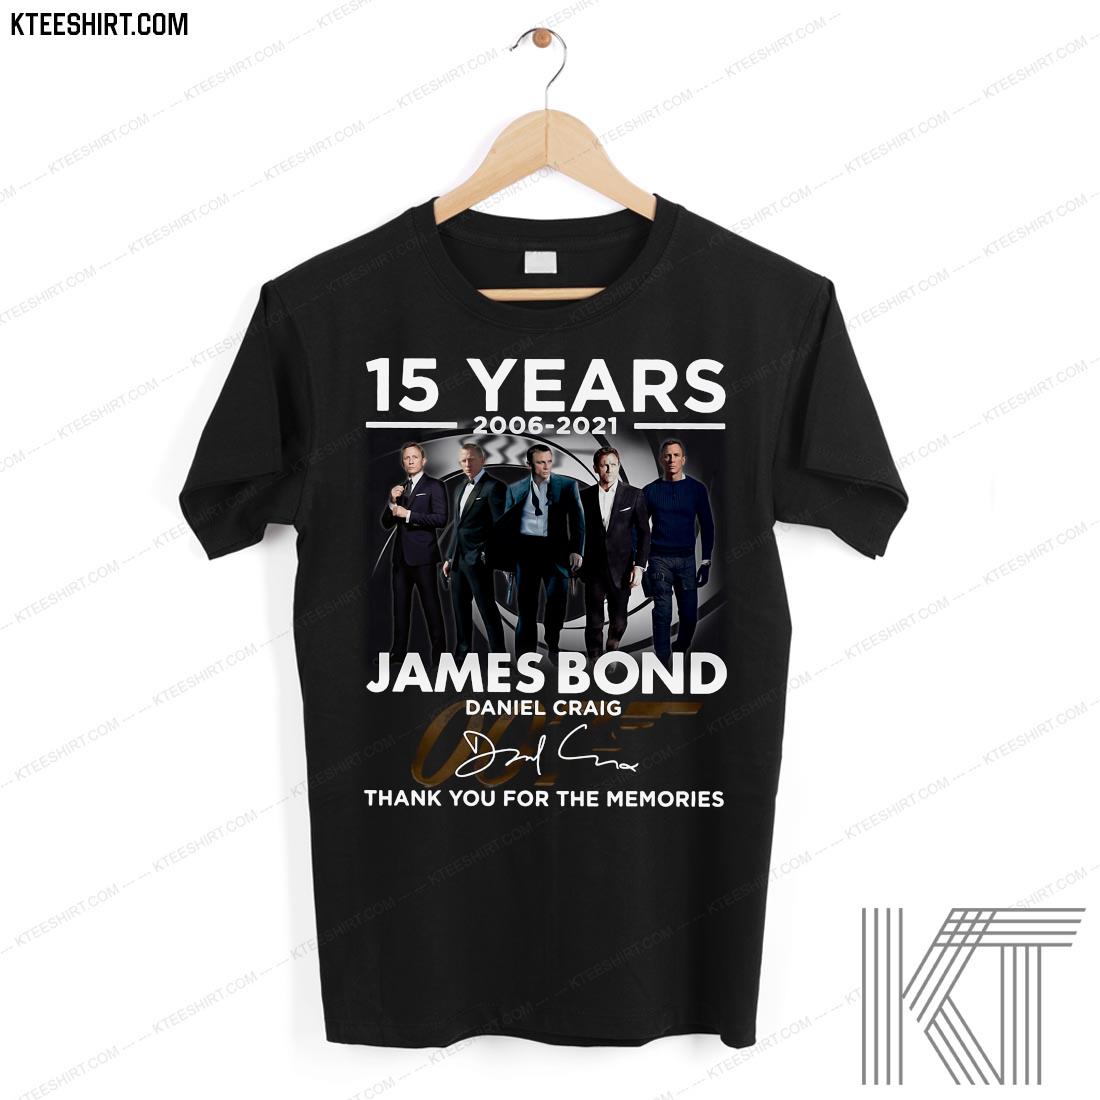 15 Years 2006 - 2021 James Bond Daniel Craig 007 Signature Thank You For The Memories Shirt